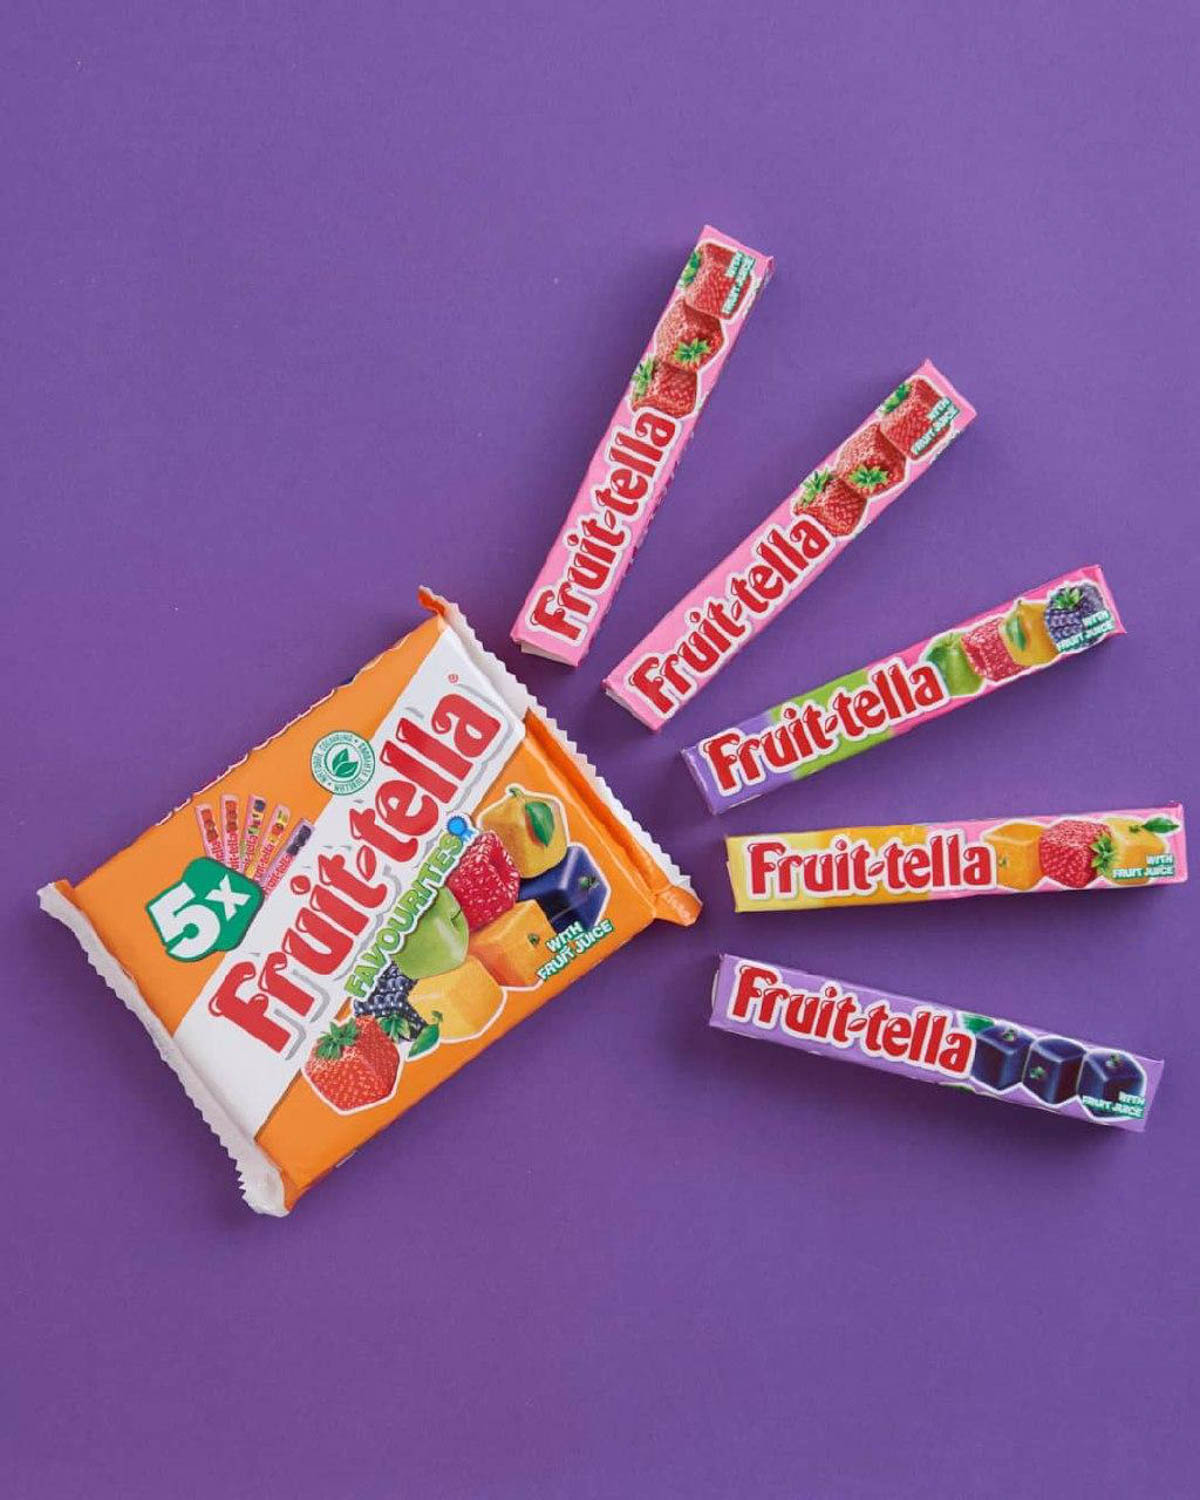 Primary School Snacks - Fruitella